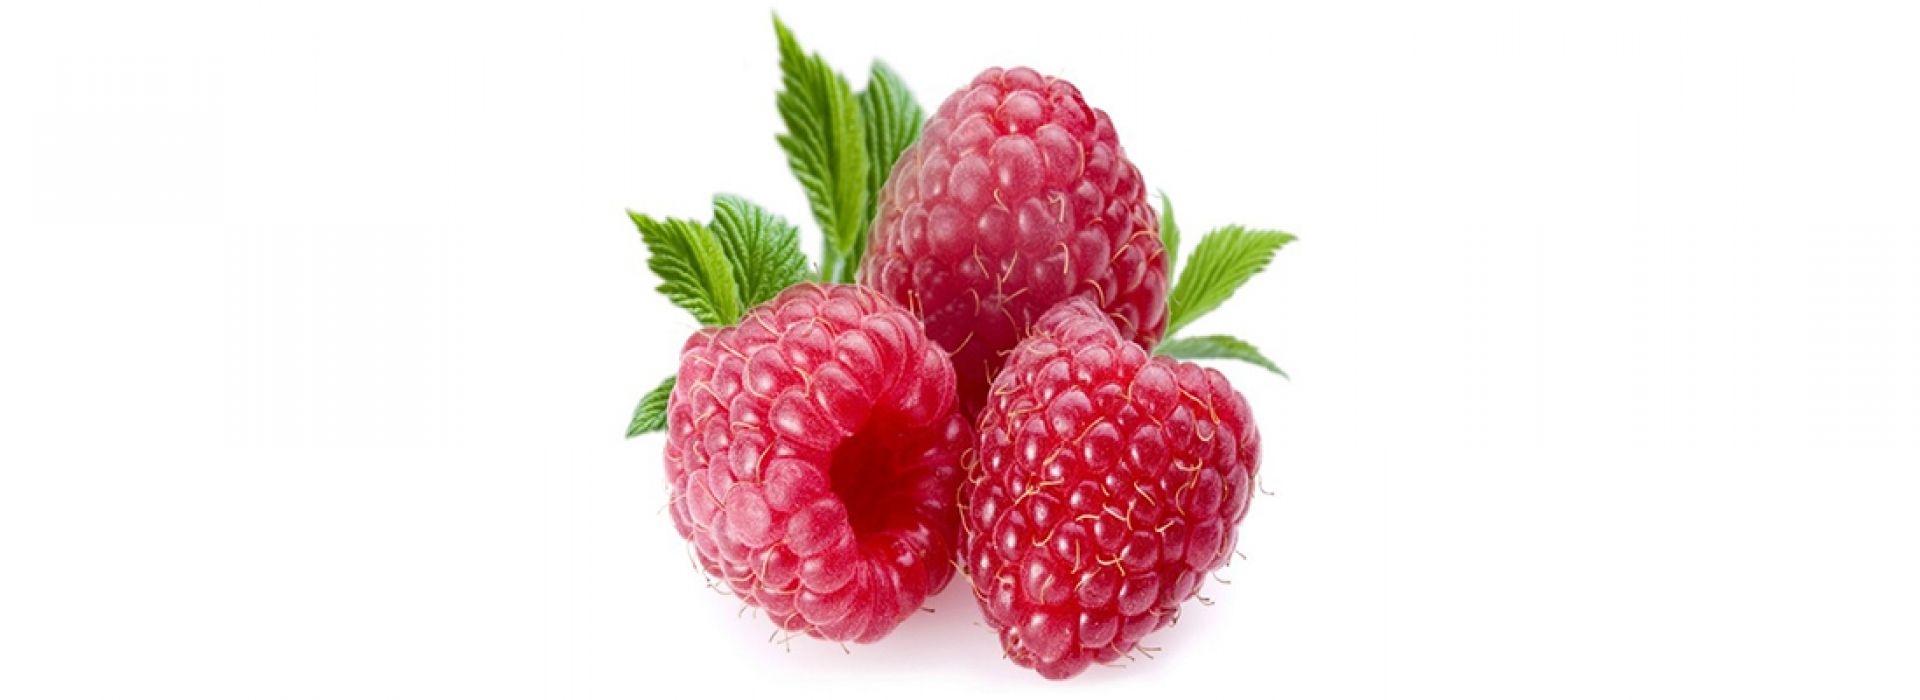 Straw Raspberries